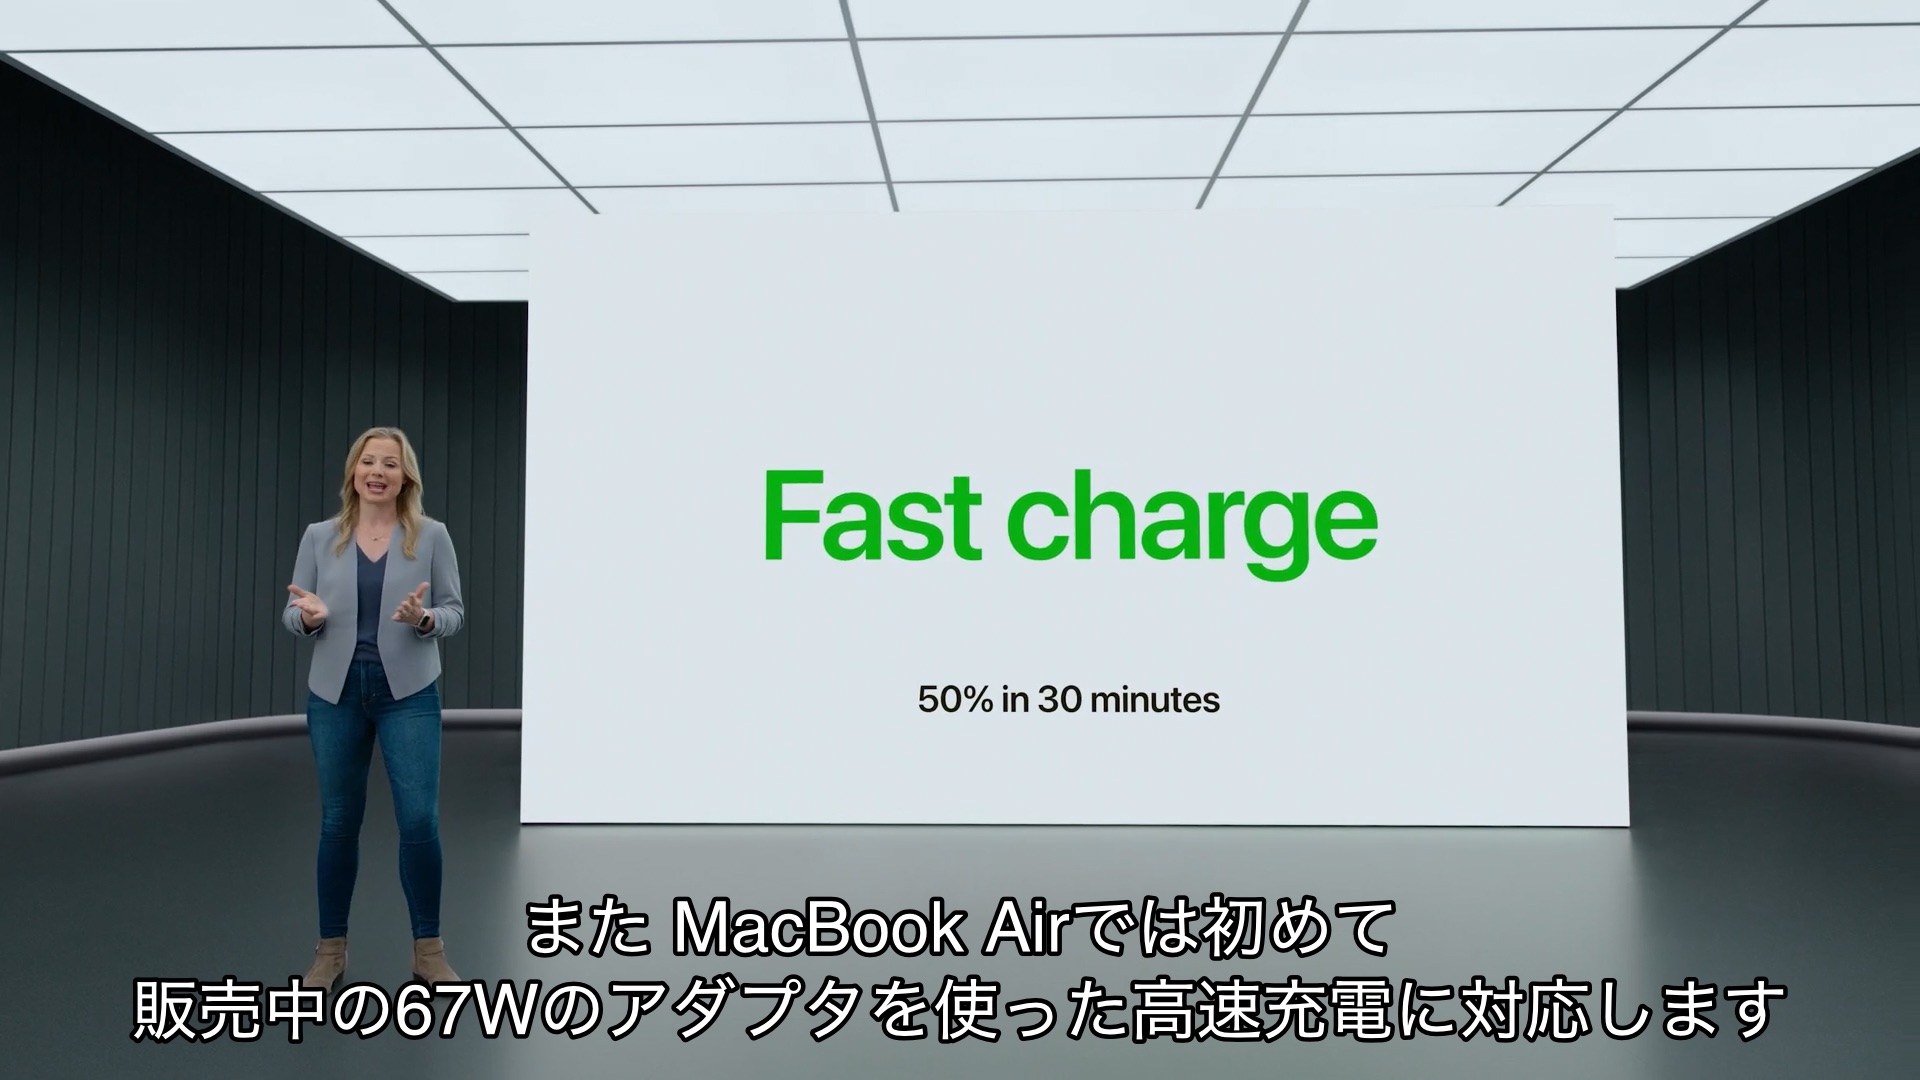 MacBook Air (M2, 2022)は0 to 50%を30分で充電できる高速充電仕様に対応